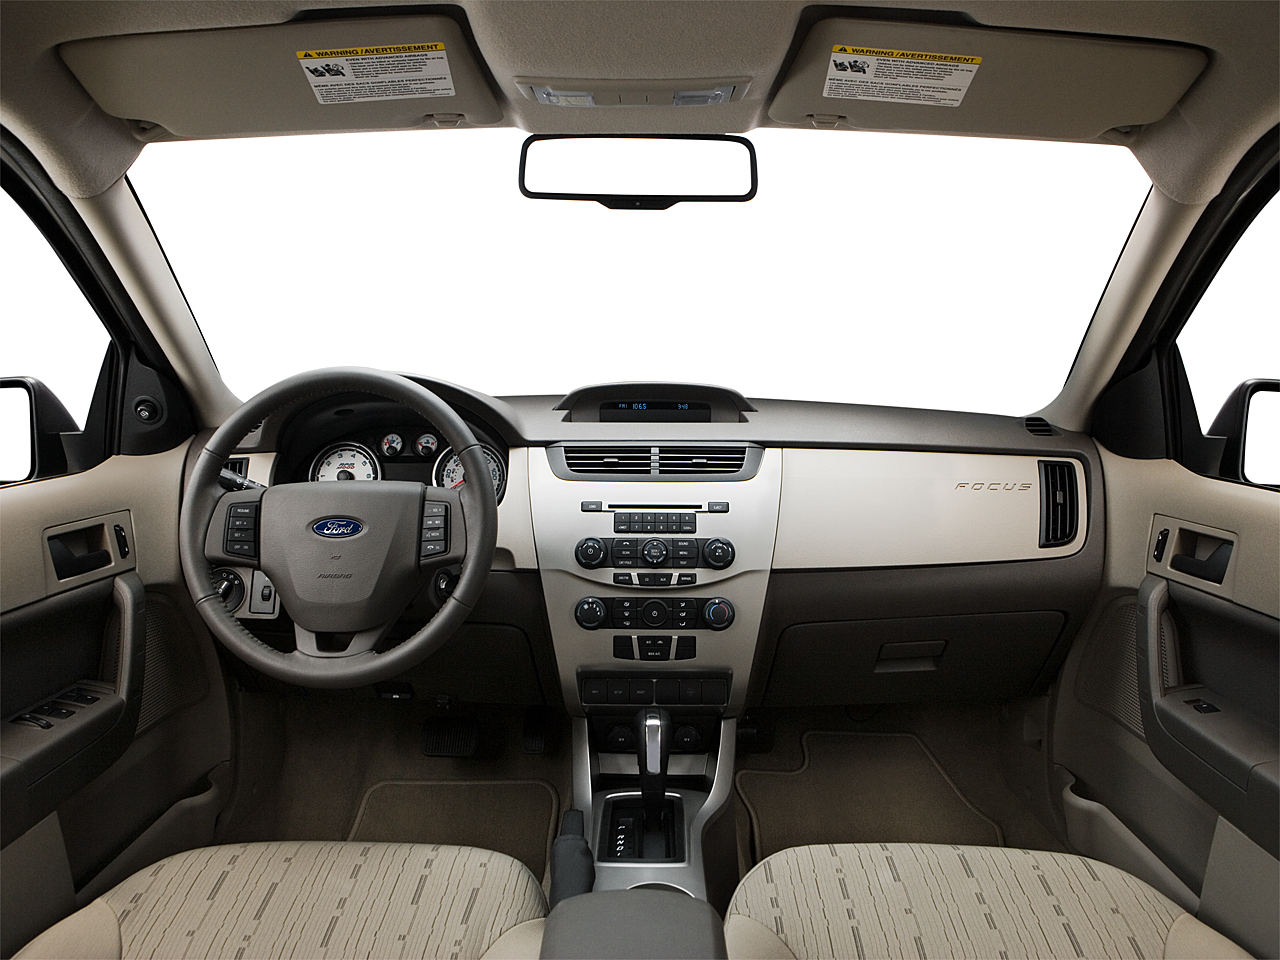 2009 Ford Focus SE 4dr Sedan - Research - GrooveCar